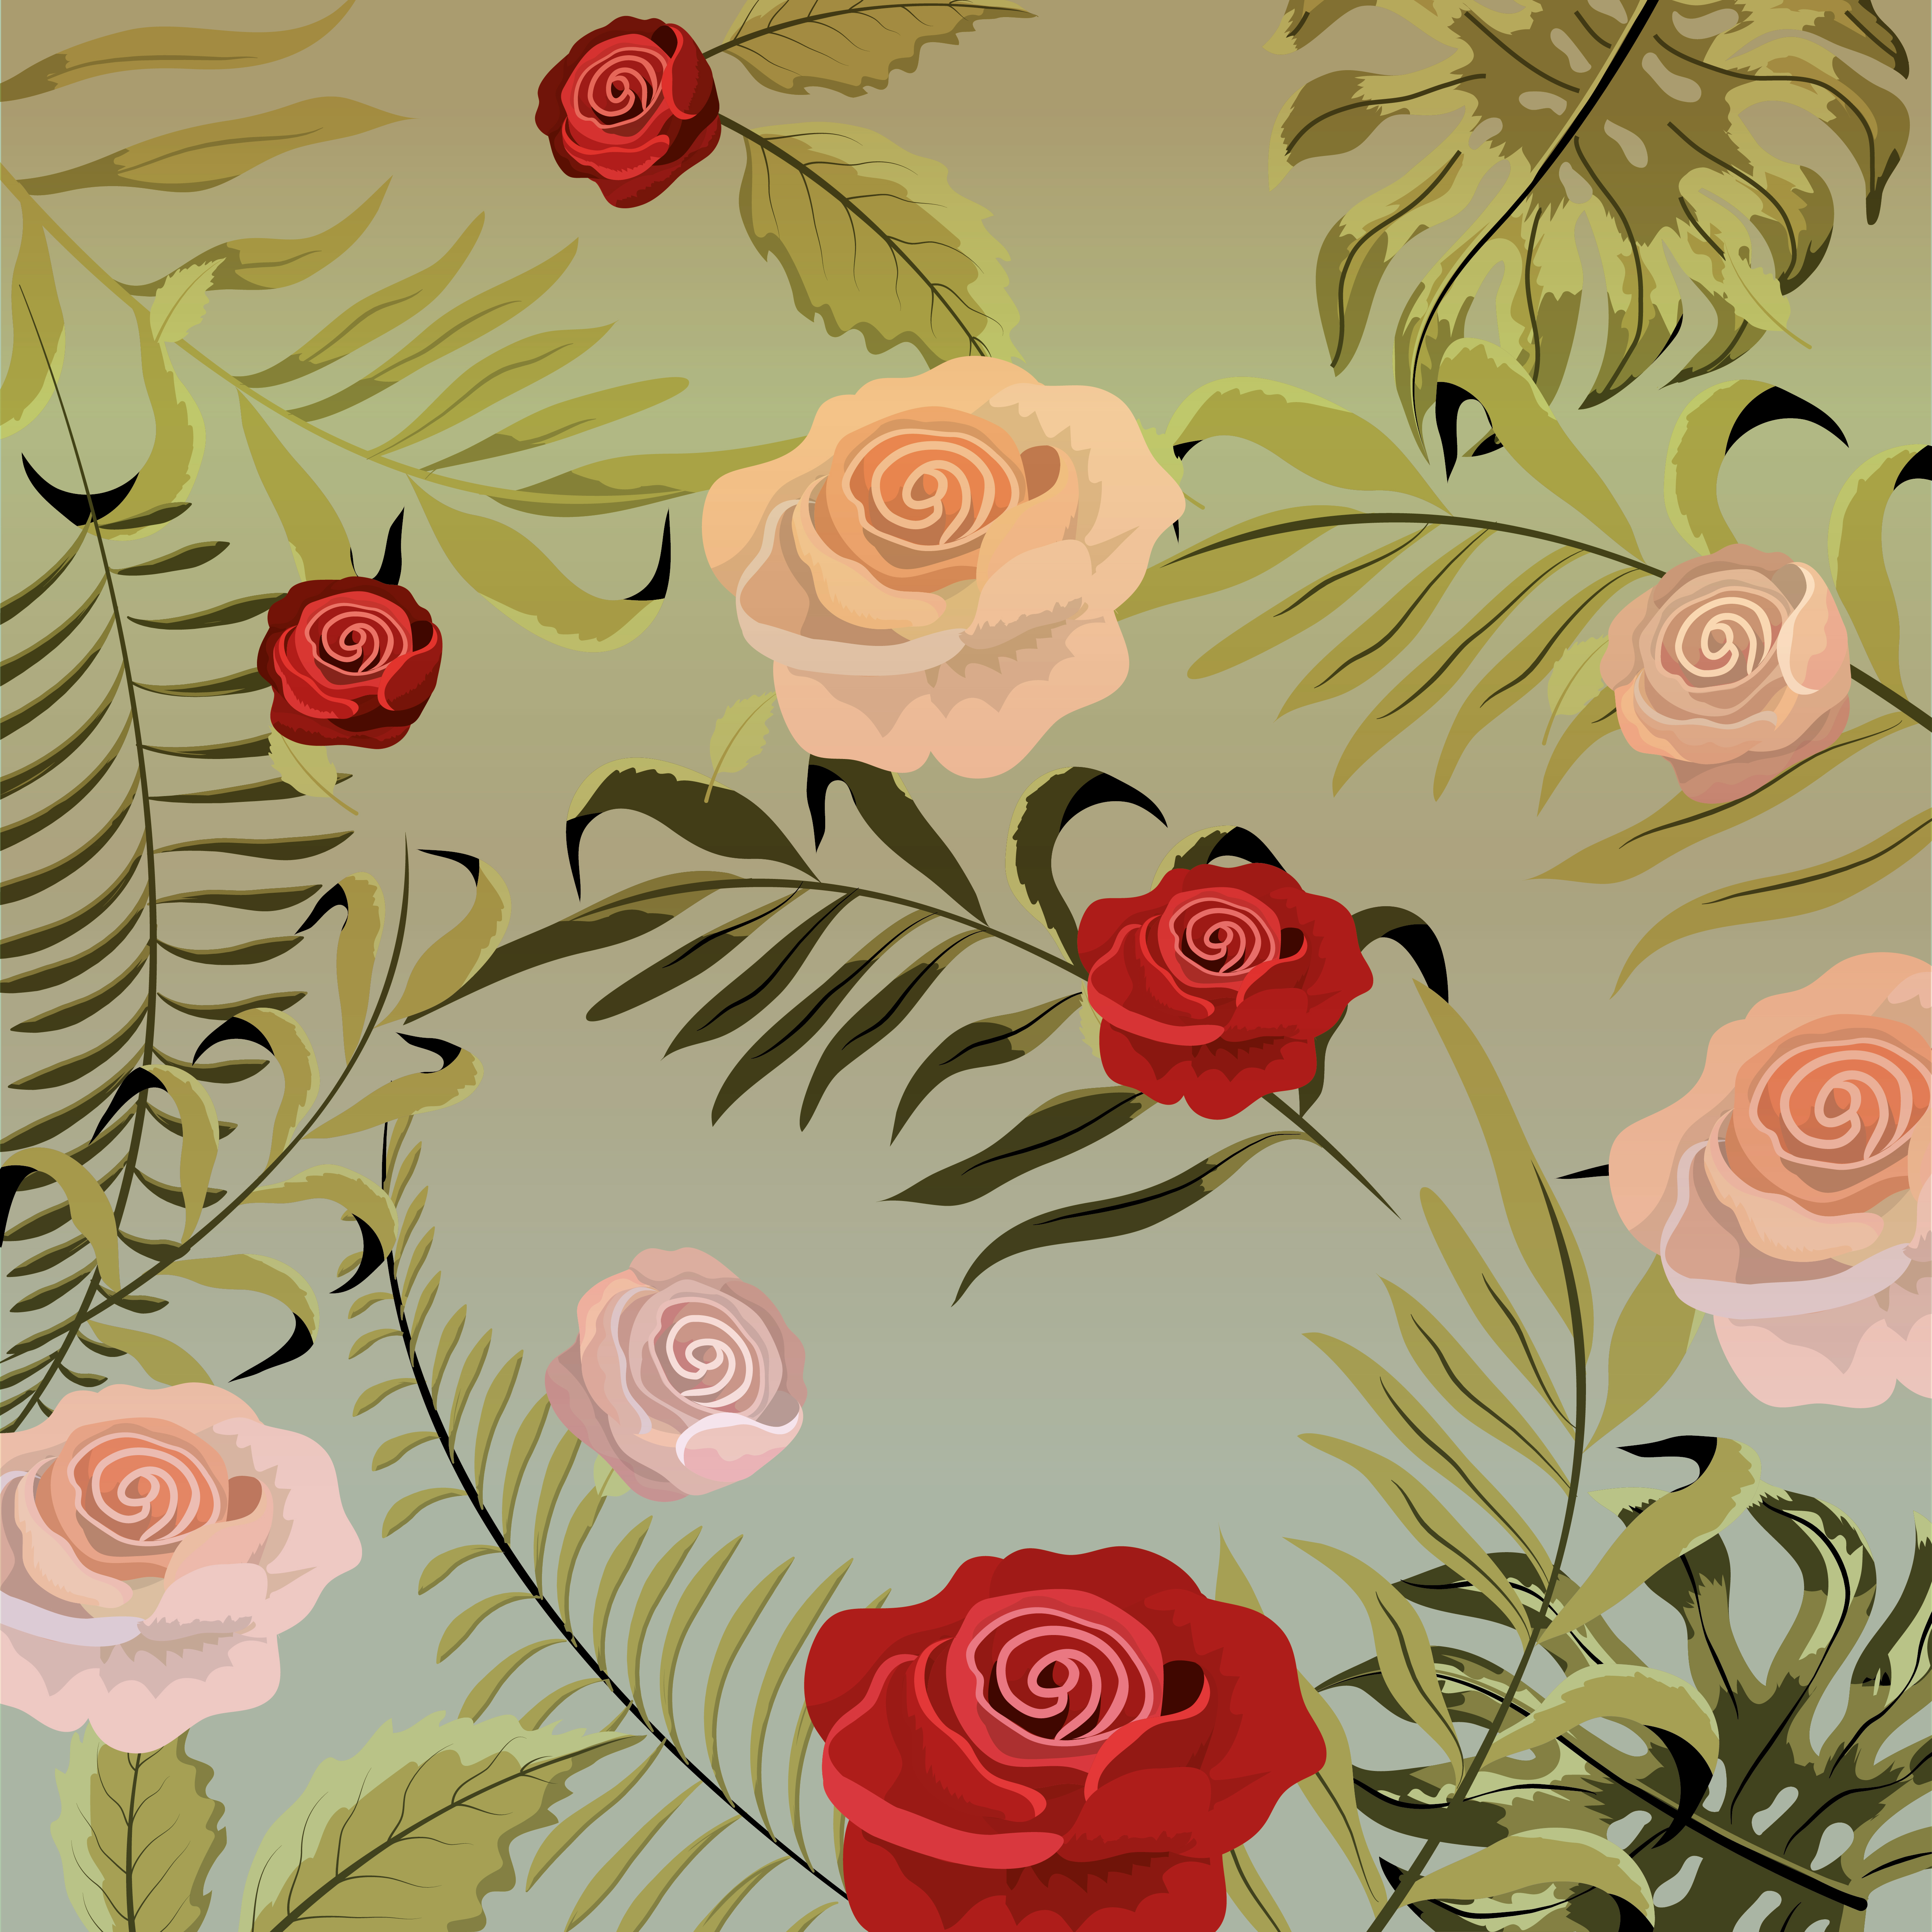 Download Vintage floral background - Download Free Vectors, Clipart Graphics & Vector Art